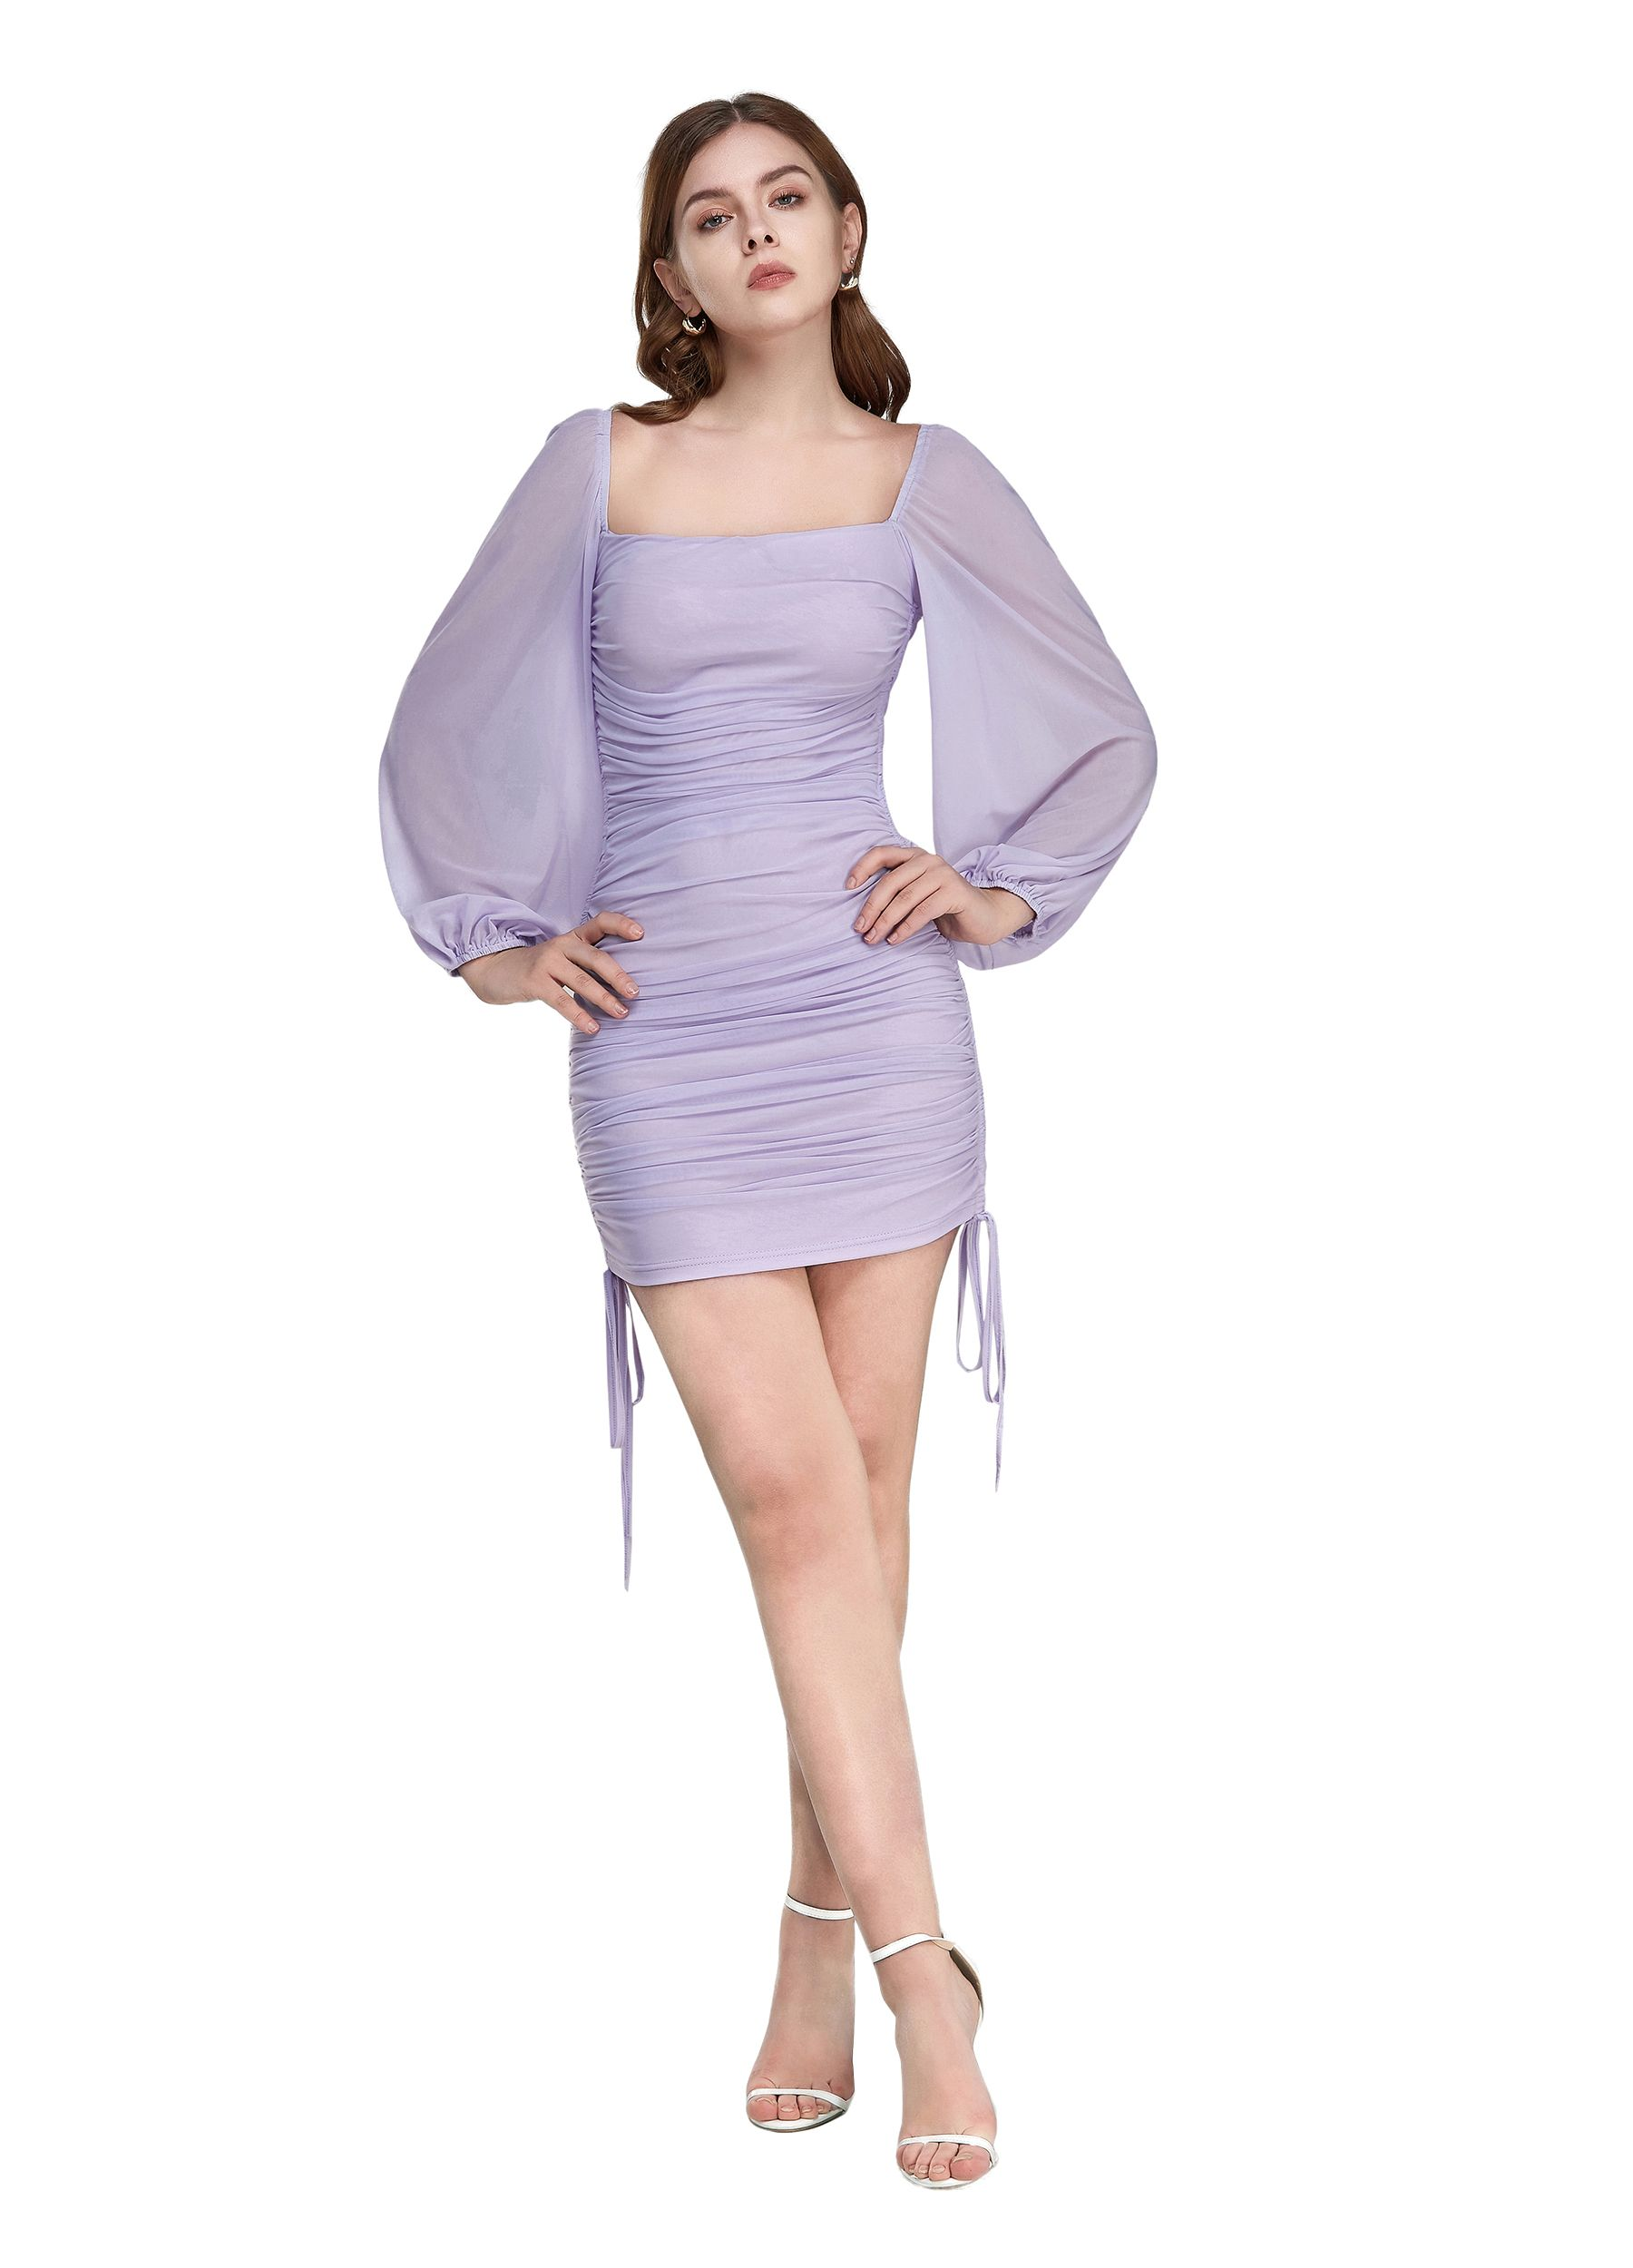 MECALA Women's Square Neckline Long Sleeve Mini Party Dress Tight Cute Bodycon